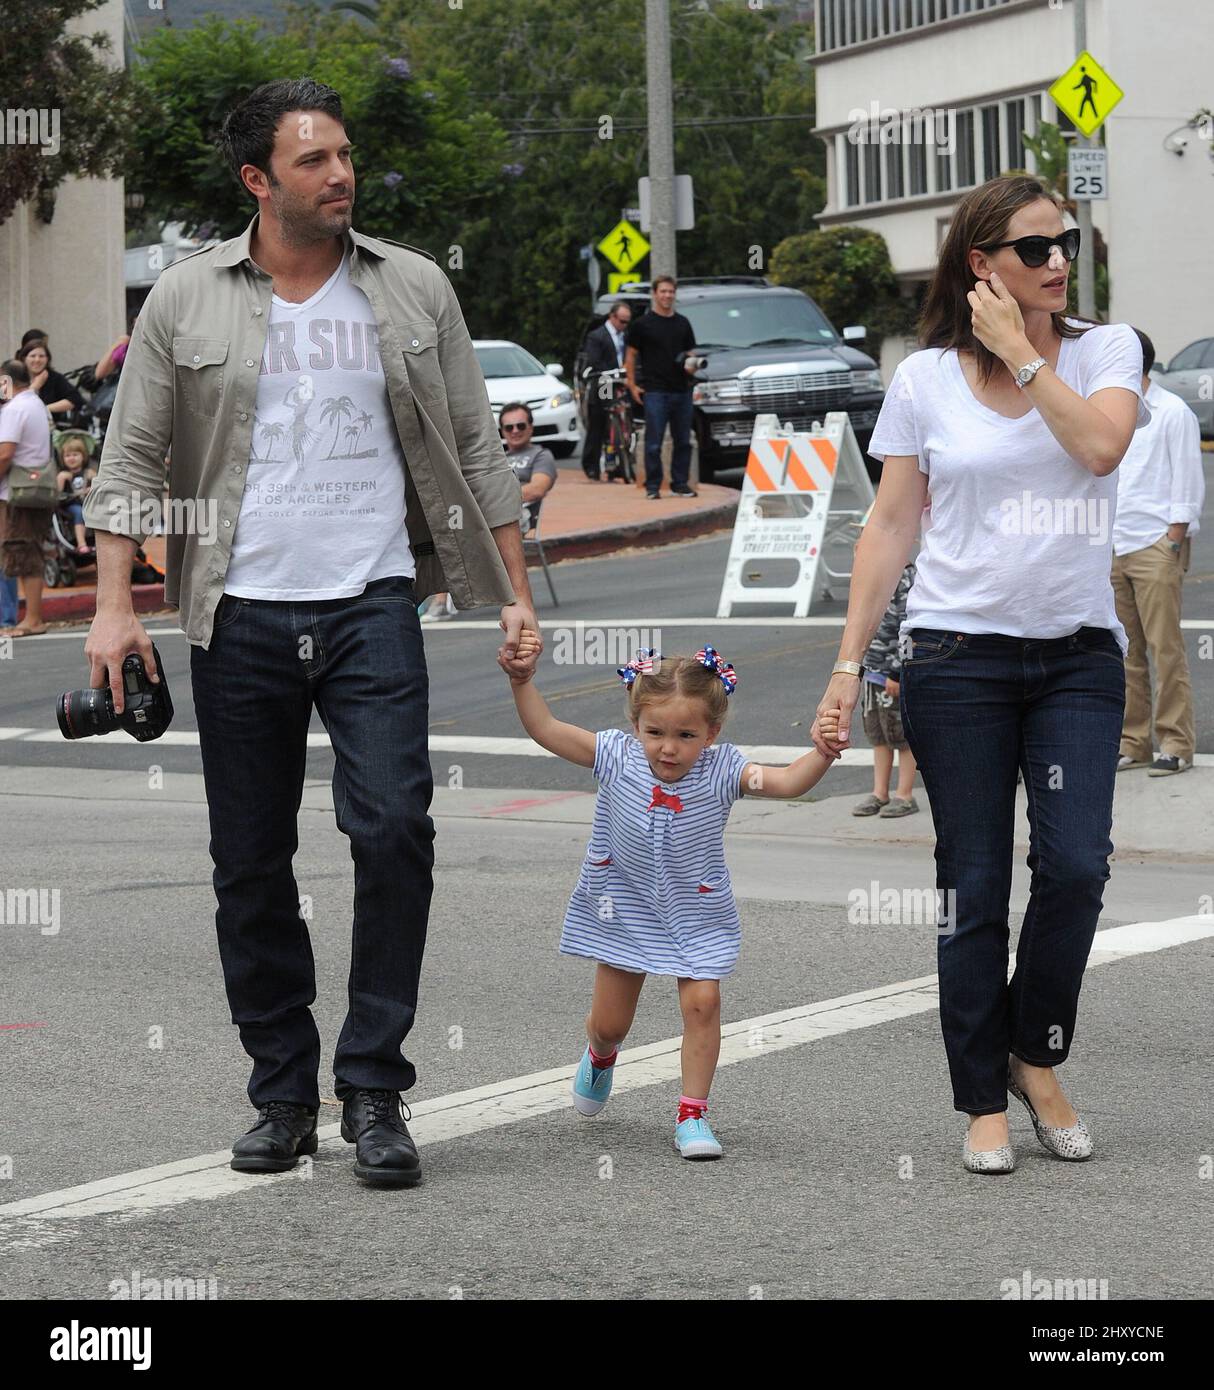 Ben Affleck, Jennifer Garner and daughter Seraphina Affleck seen during